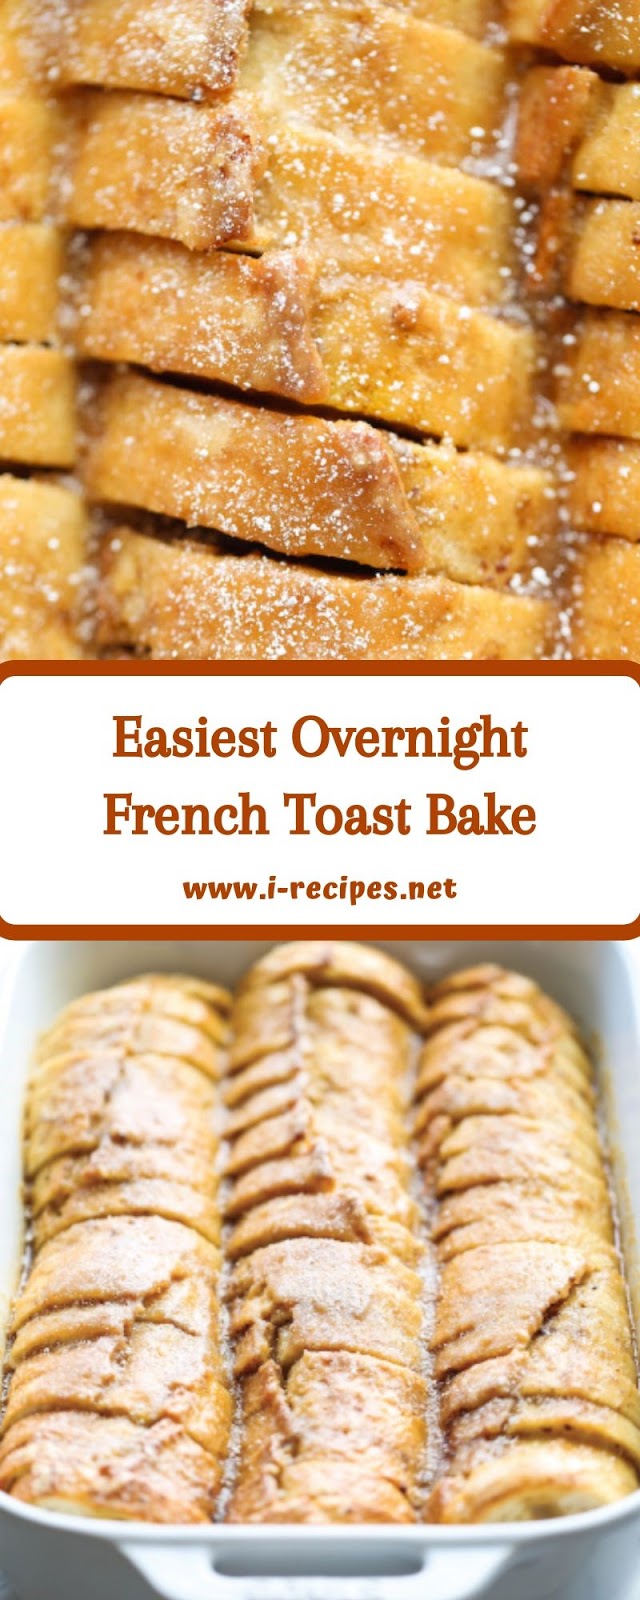 Easiest Overnight French Toast Bake